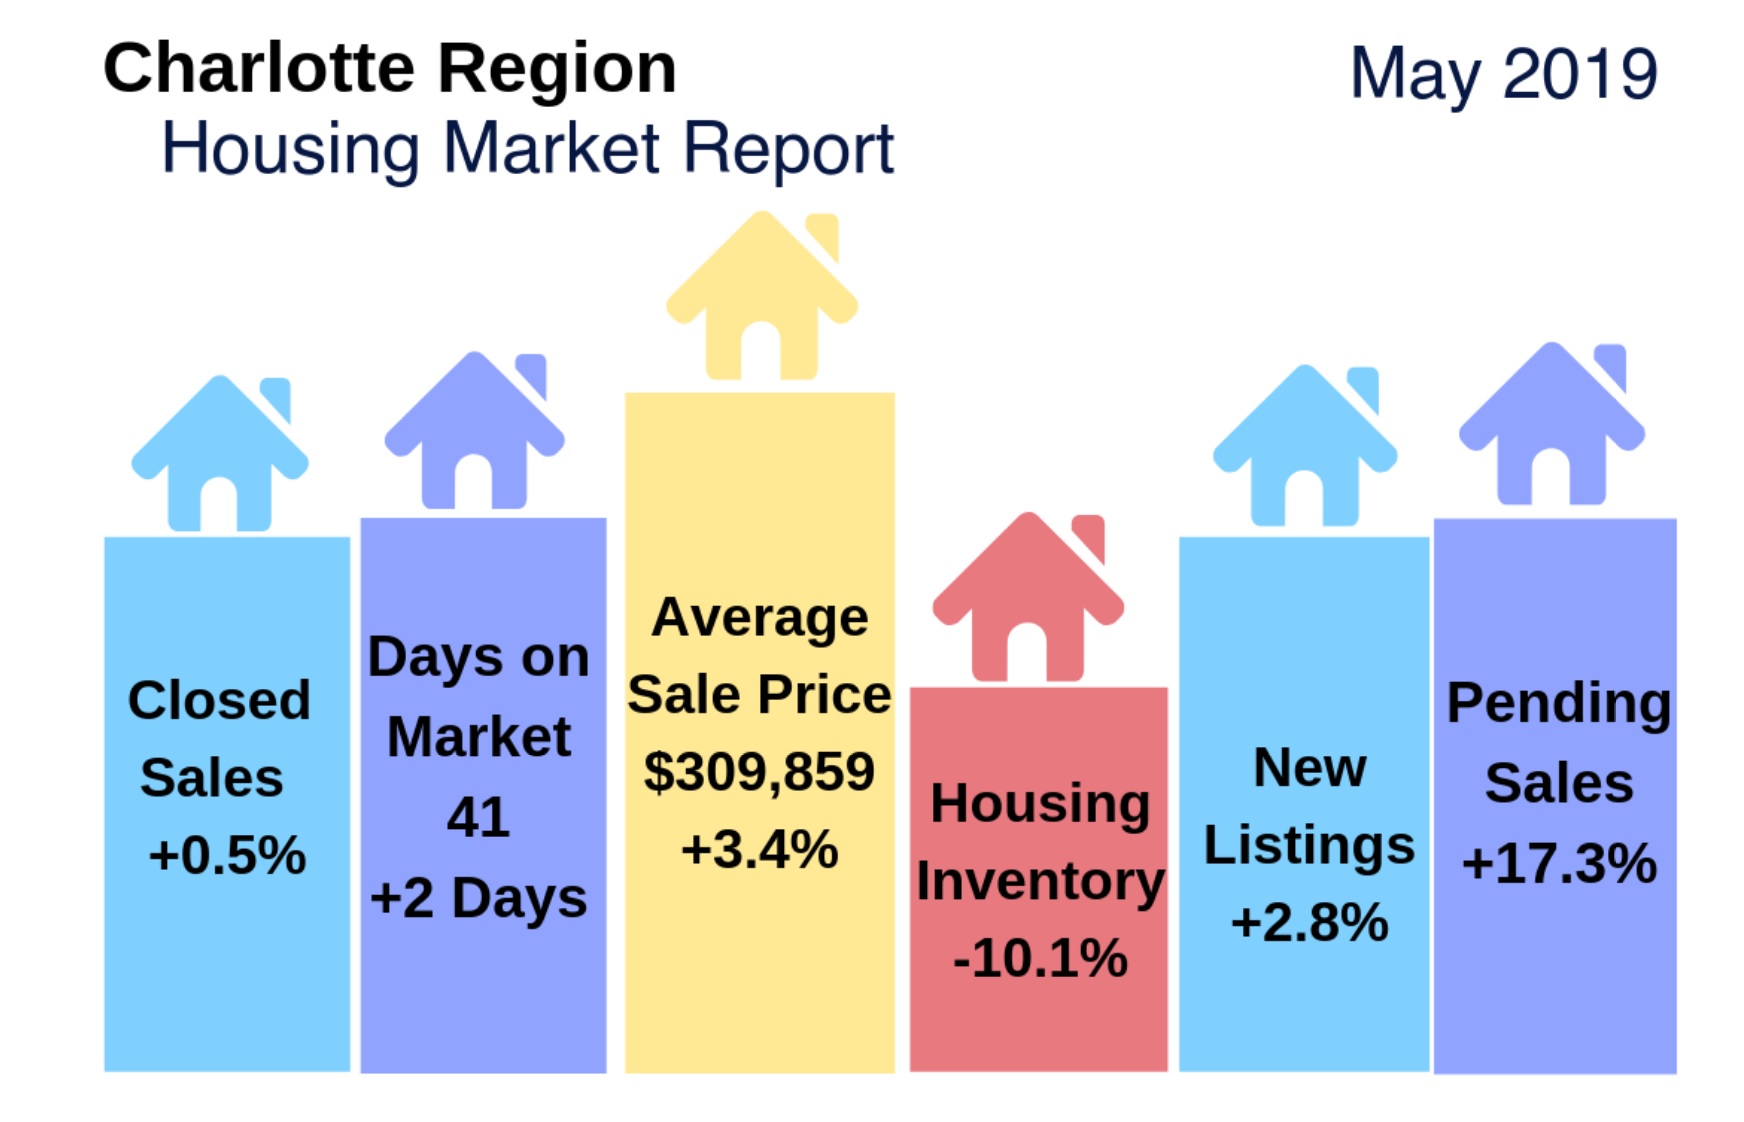 Charlotte Region Housing Market Snapshot May 2019